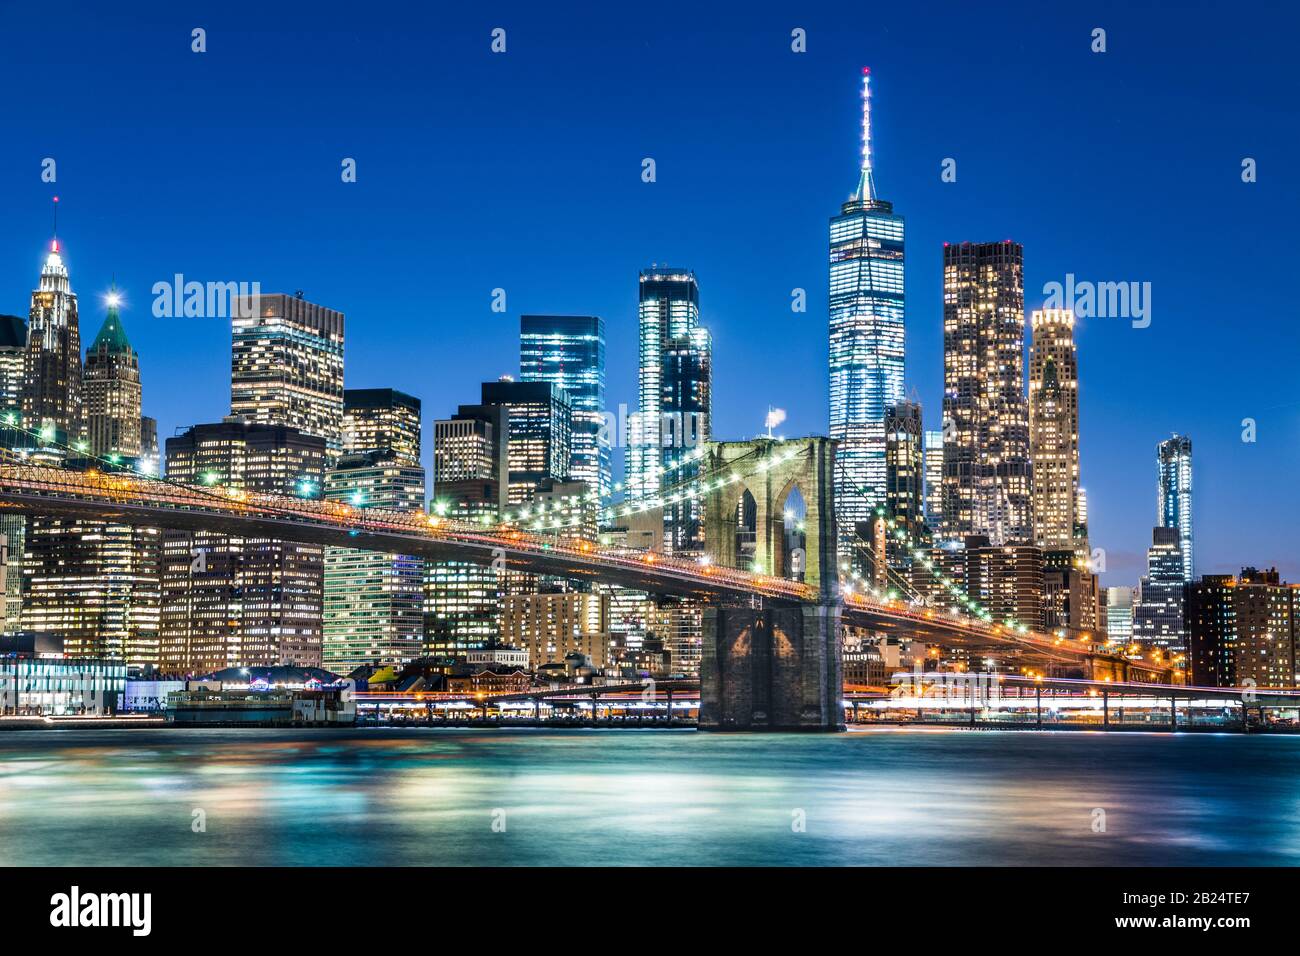 New york city skyline with Brooklyn Bridge at night Stock Photo